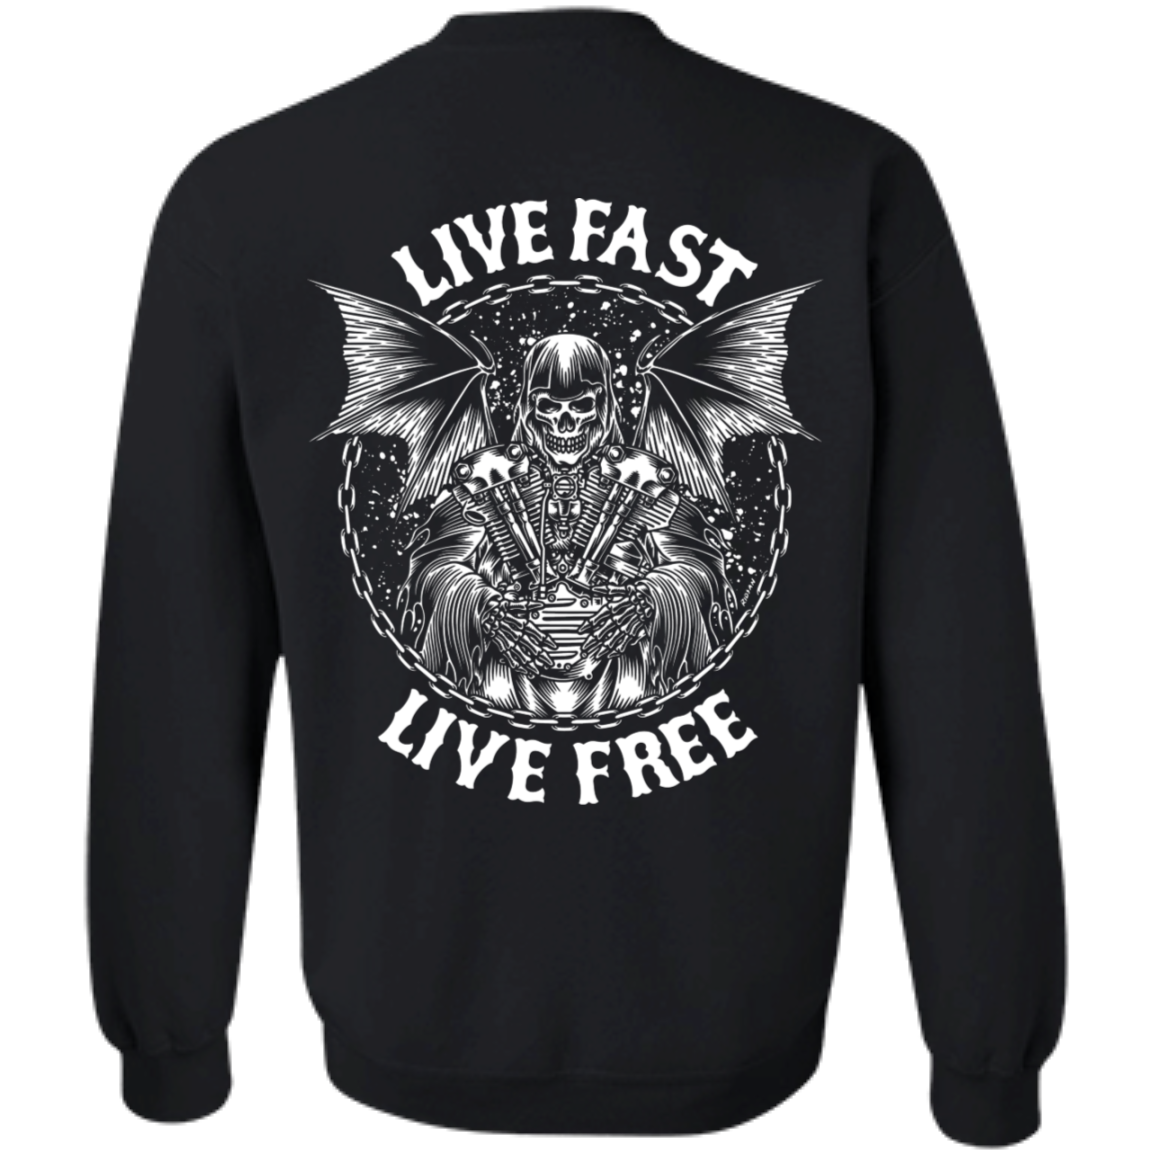 Live Fast Live Free Crewneck Pullover Sweatshirt